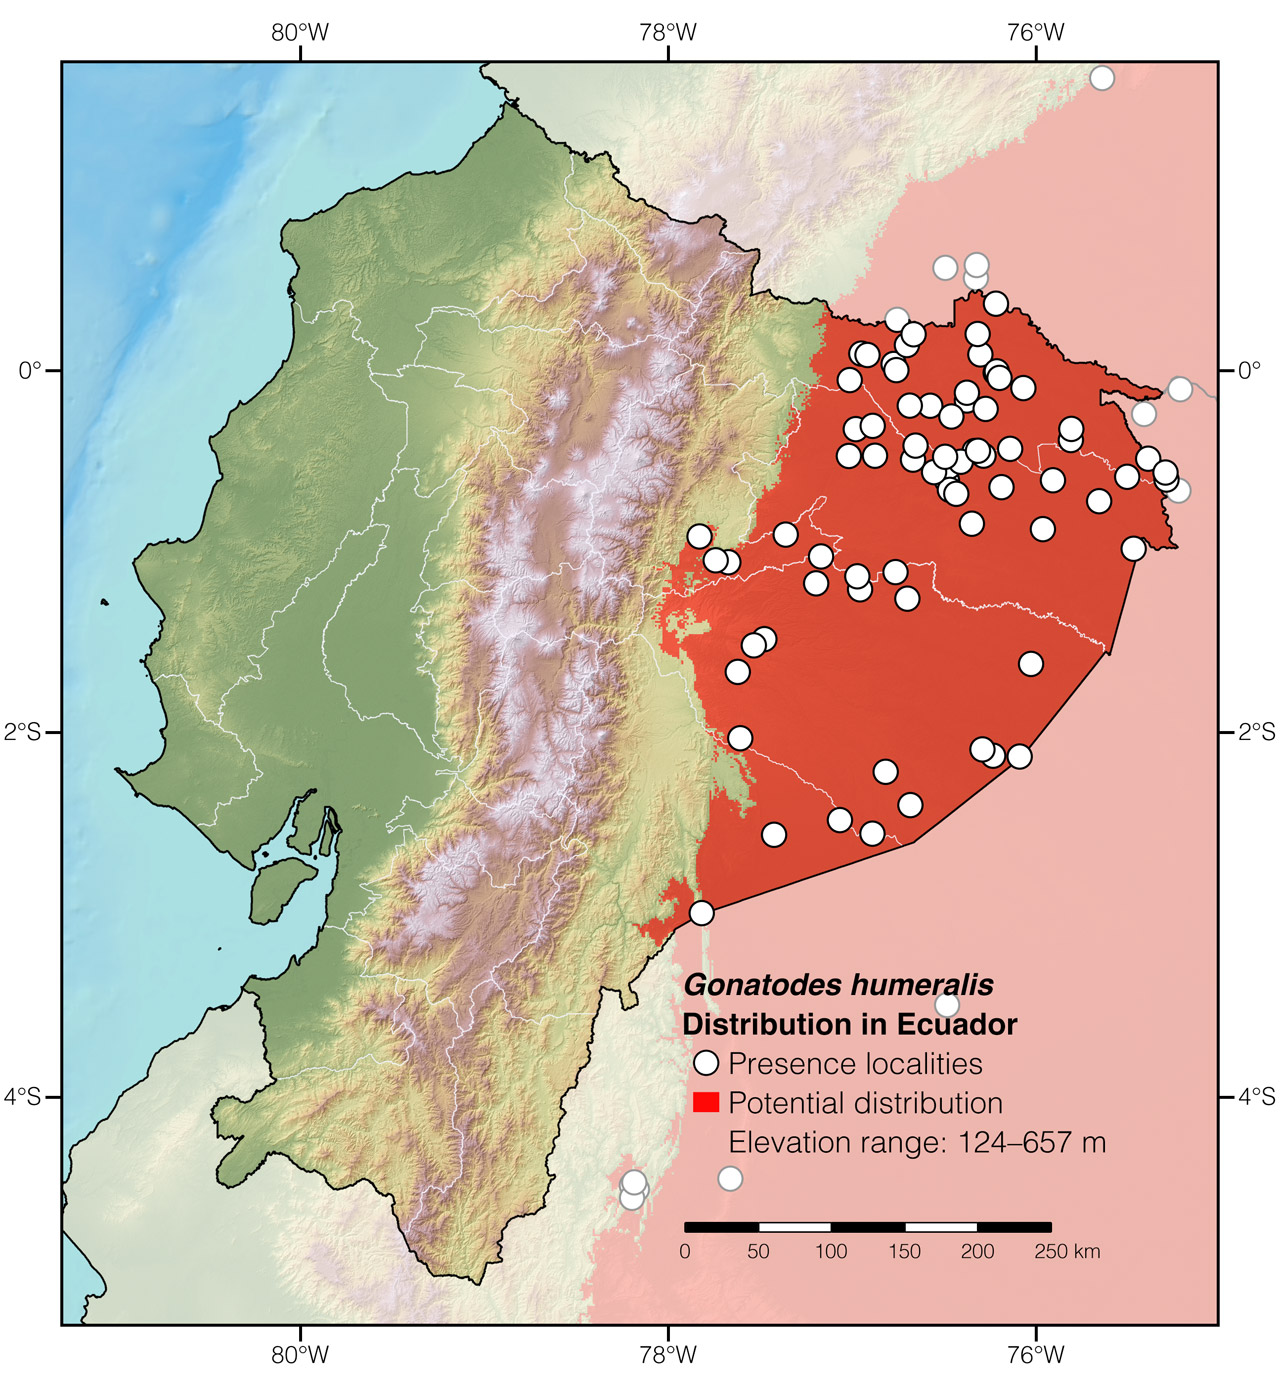 Distribution of Gonatodes humeralis in Ecuador